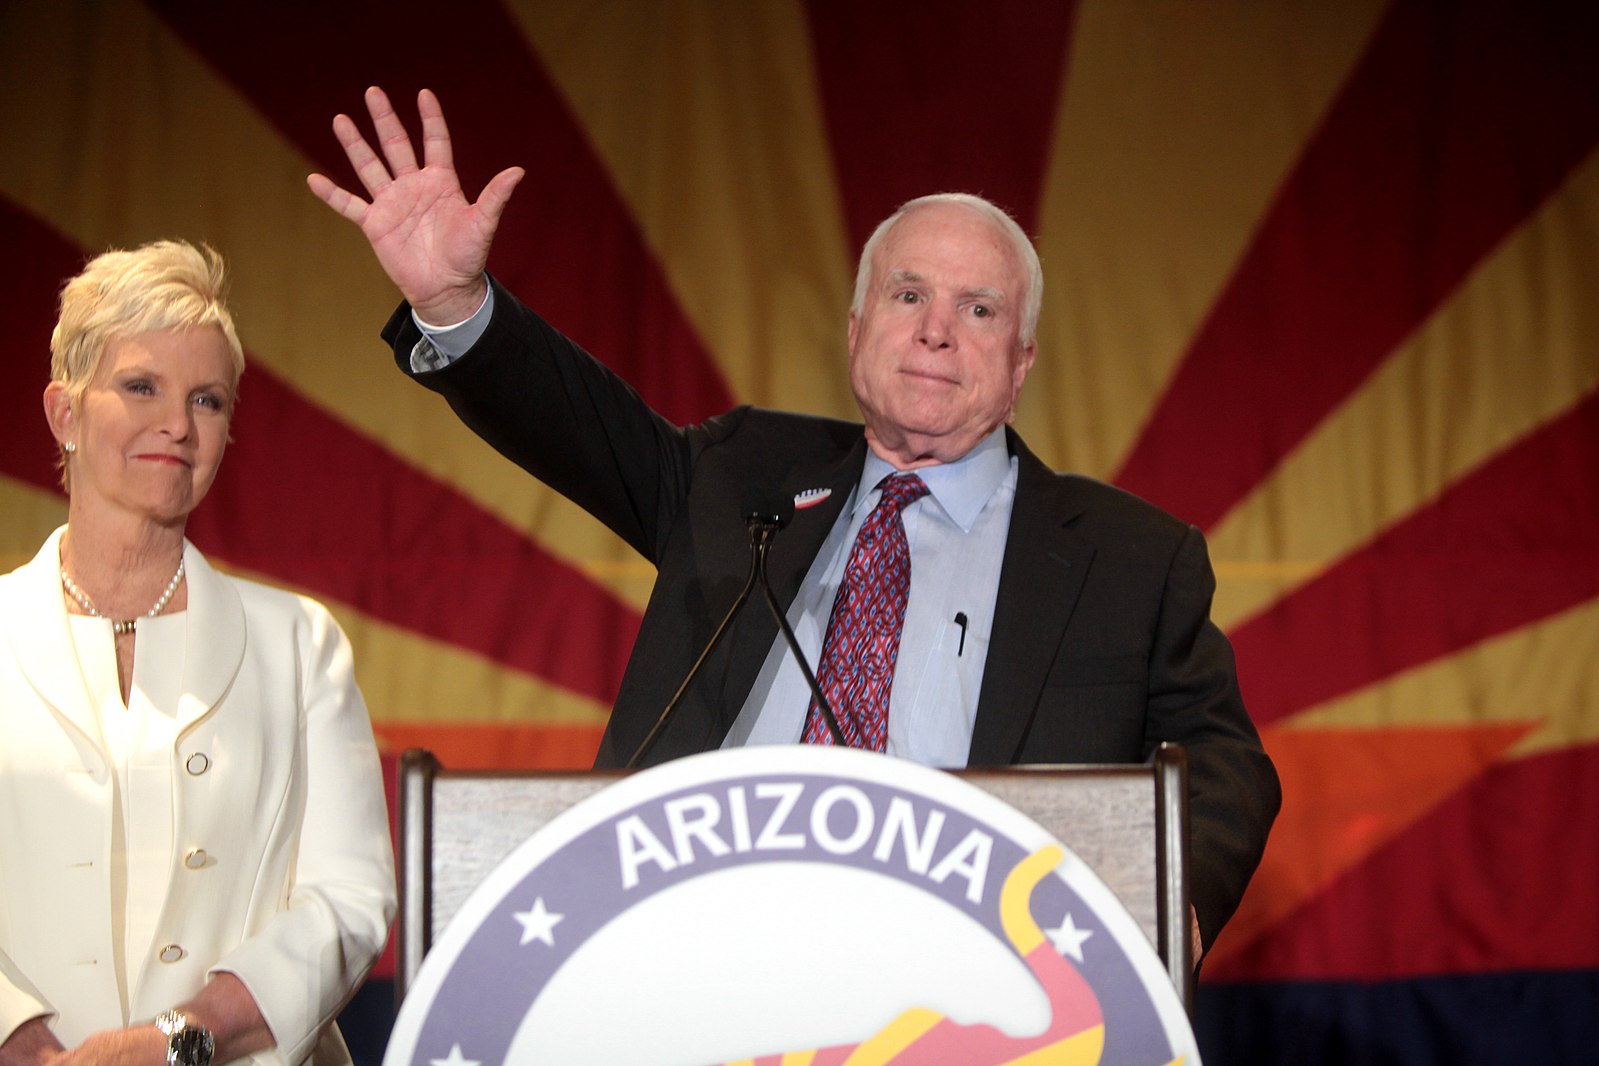 Cindy McCain All But Endorses Joe Biden at DNC Convention - 